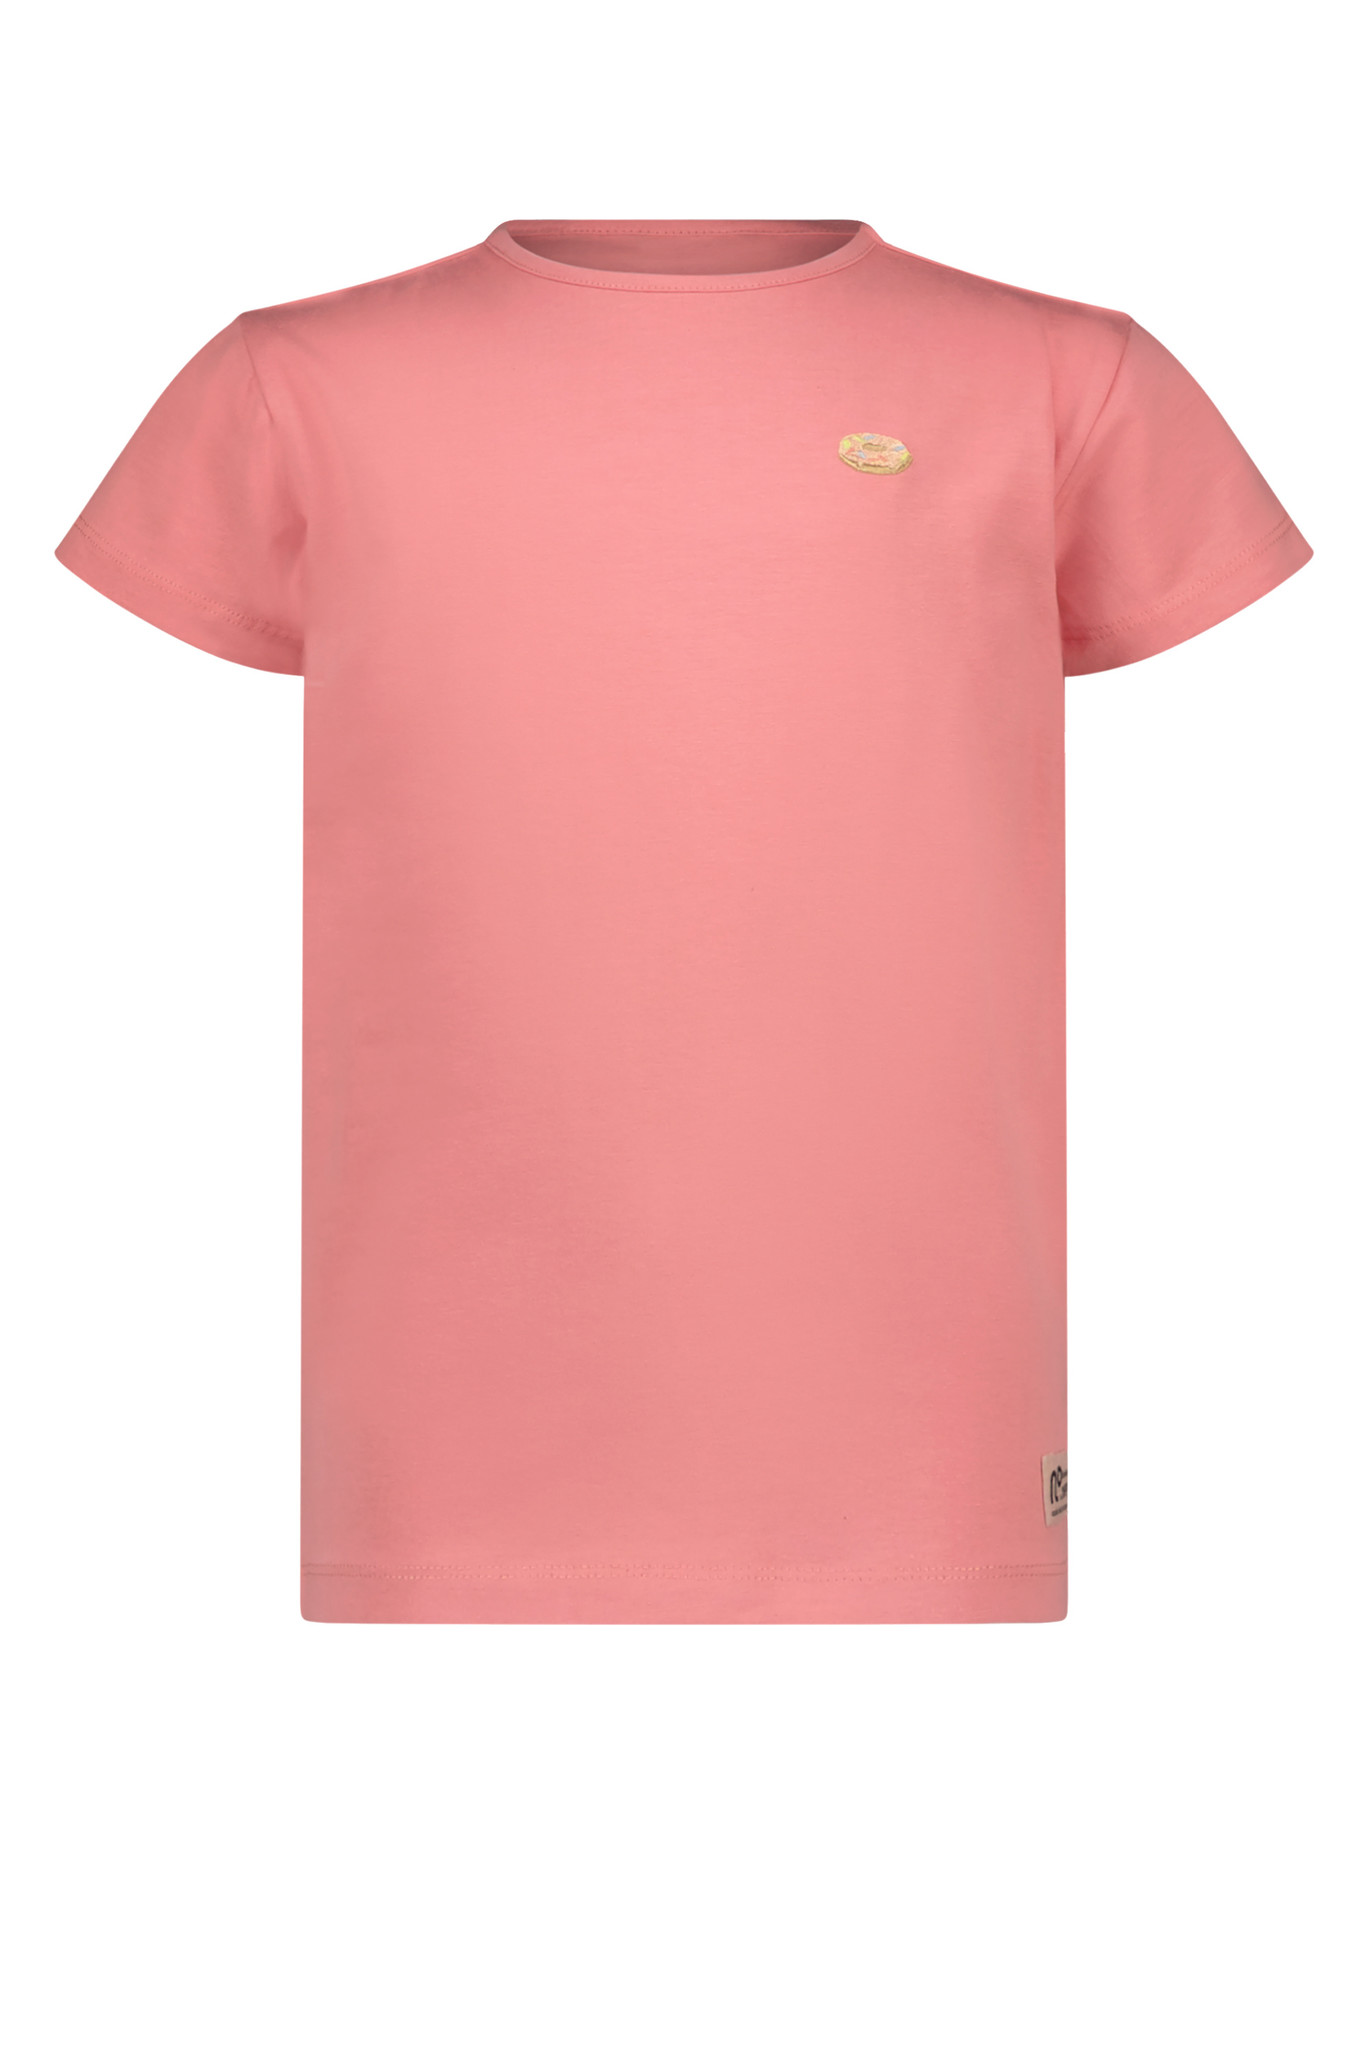 NoNo Meisjes t-shirt - Basic - Perzik blossom